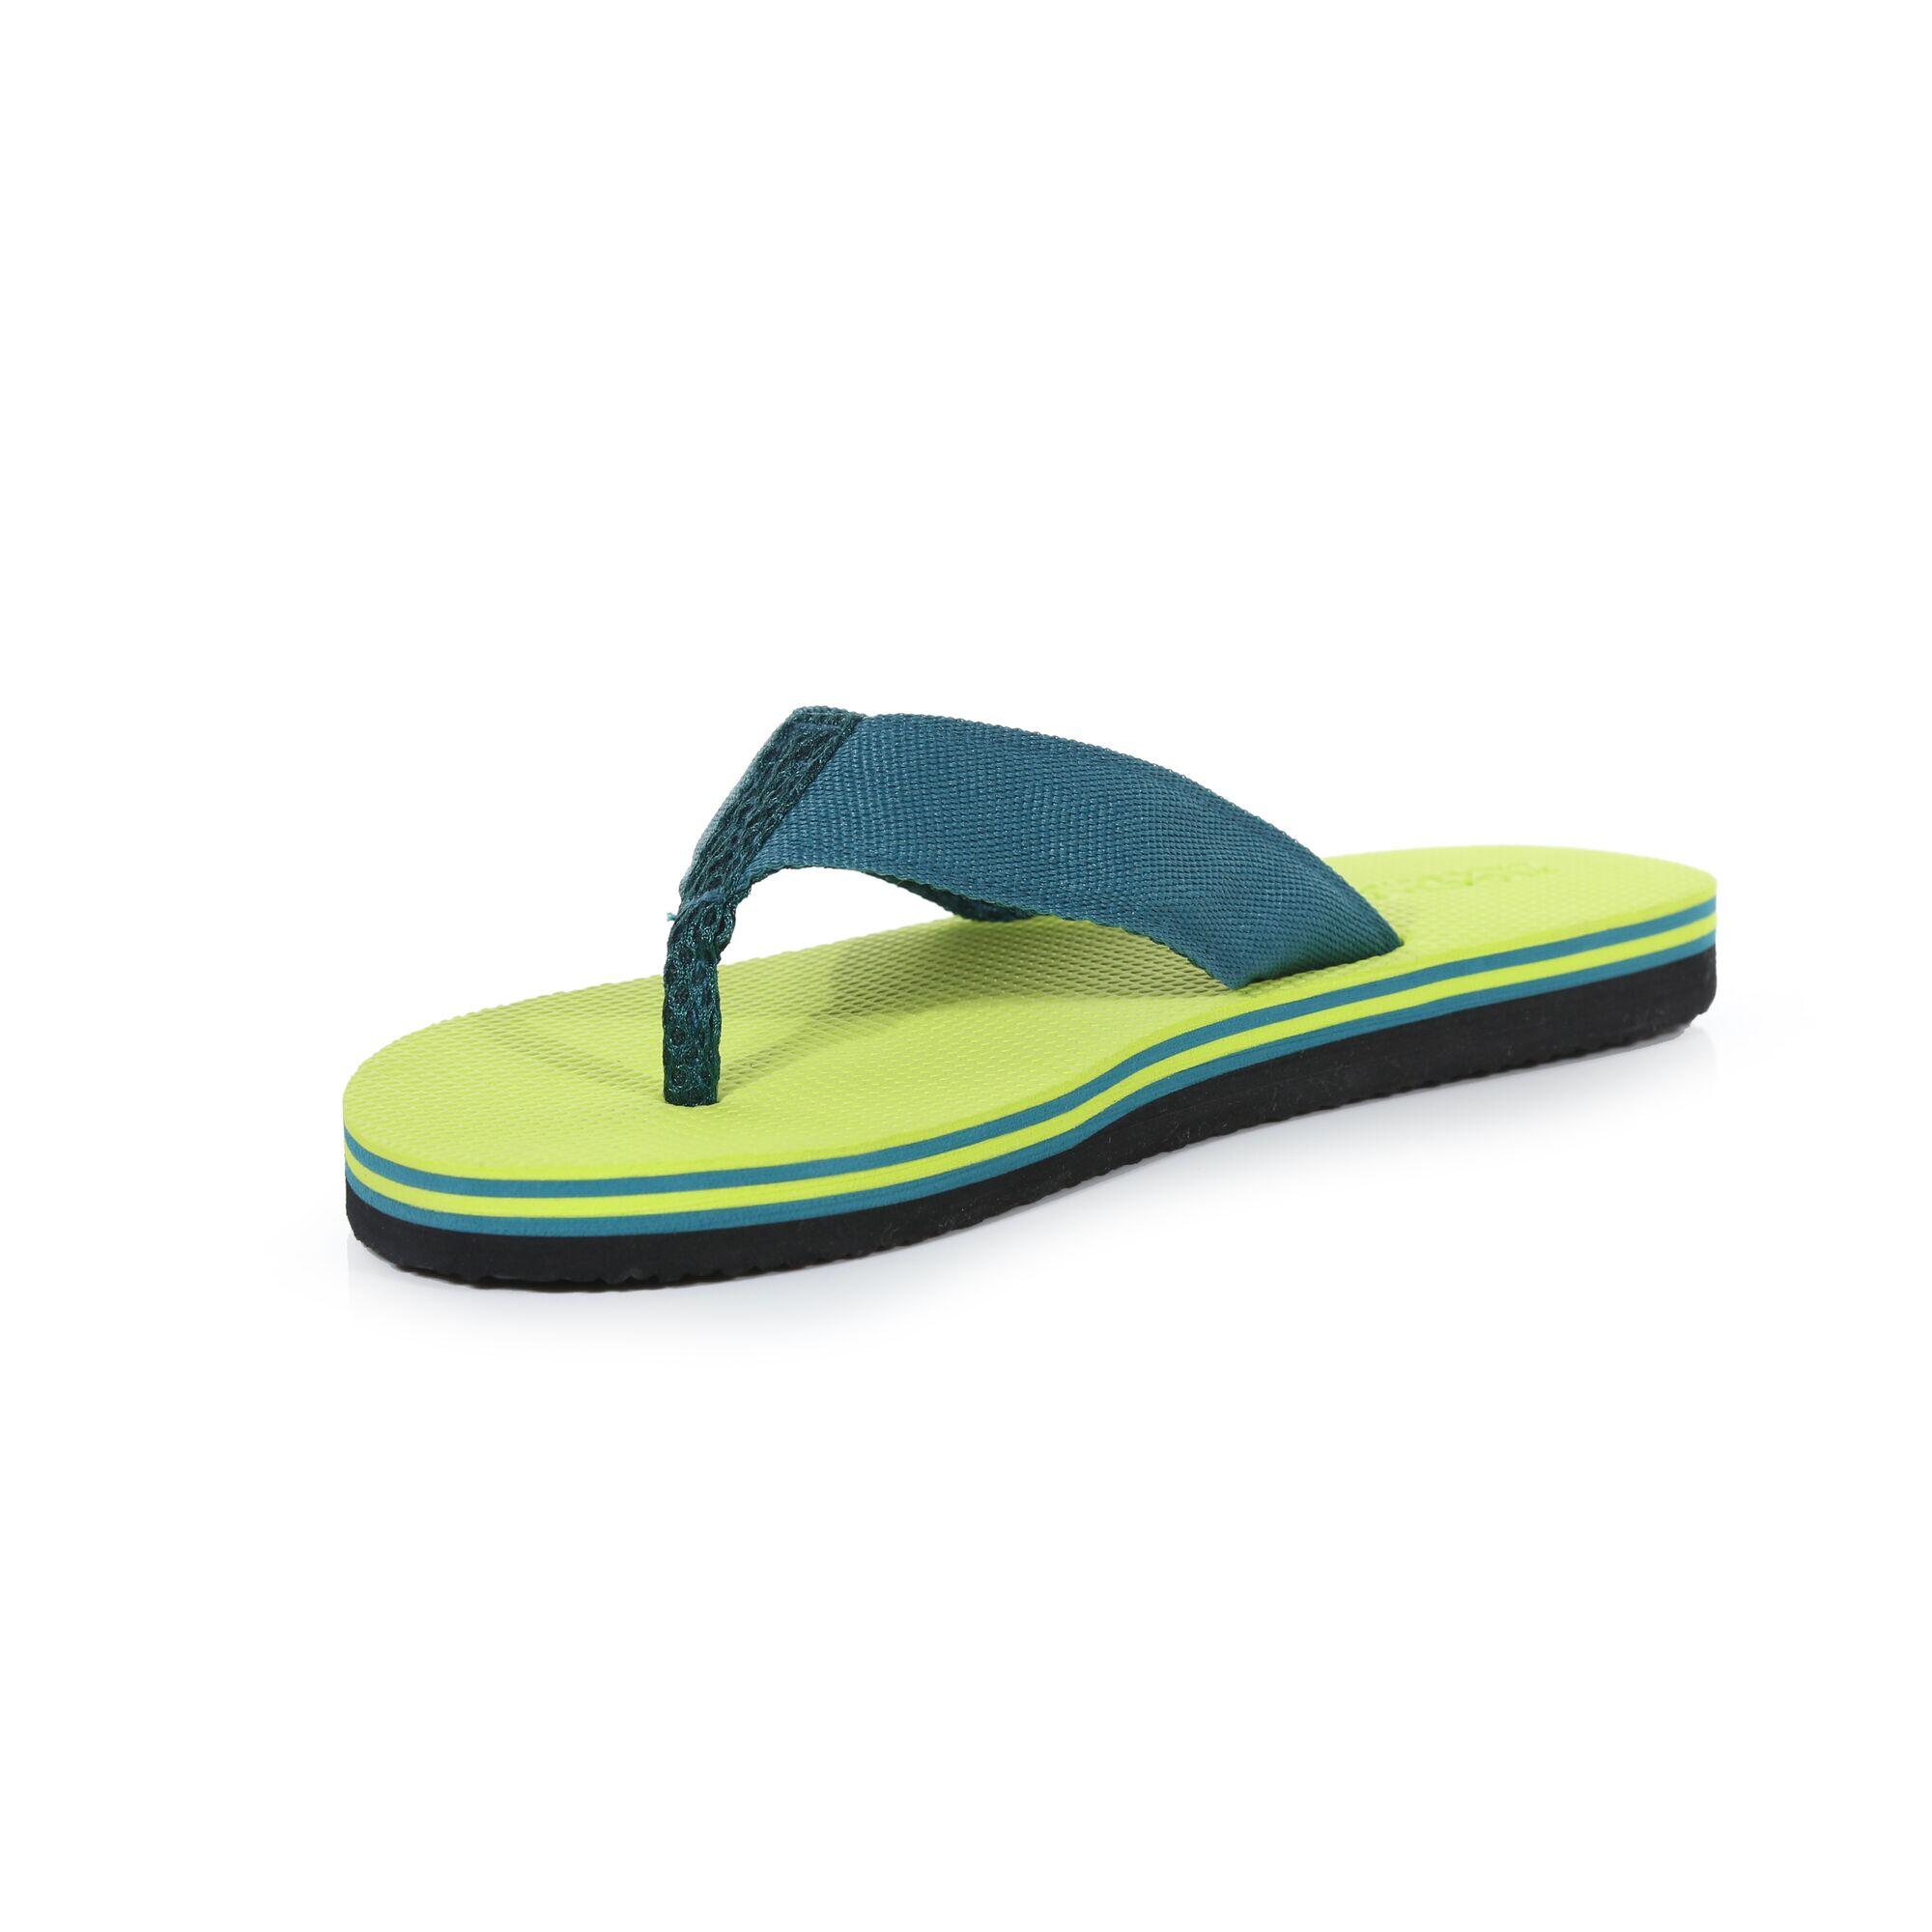 Rico Men's Poolside Flip Flops - Kiwi Green 4/5